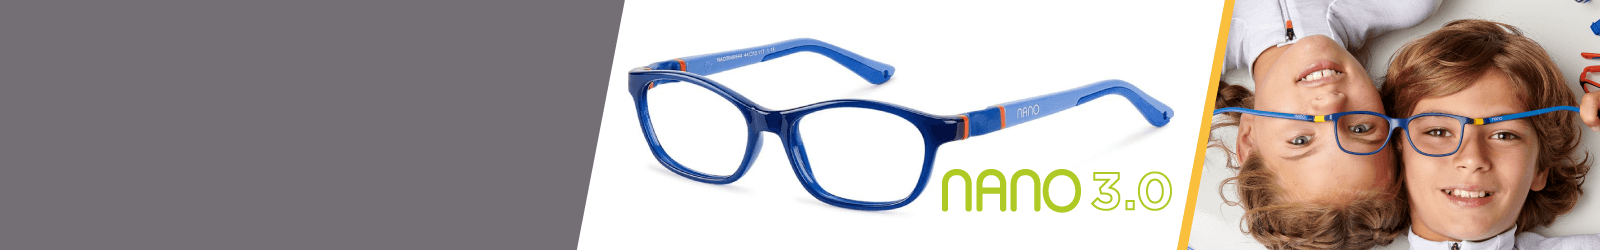 Nano 3.0 Indestructible Eyeglass Lenses   for Girls